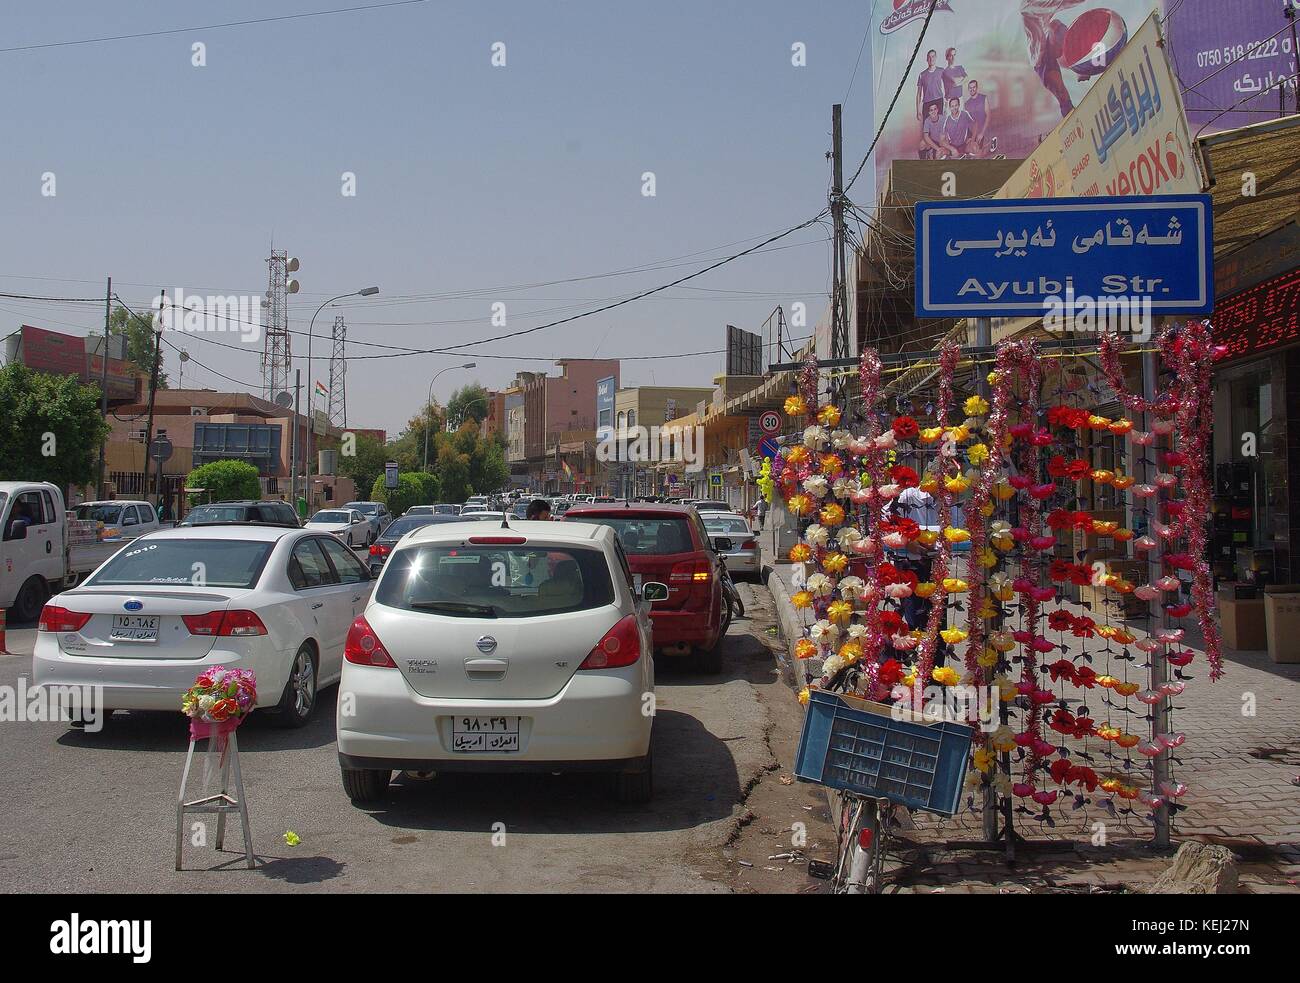 Erbil, the capital of Iraqi Kurdistan: Traffic and Shops at Ayubi street Stock Photo